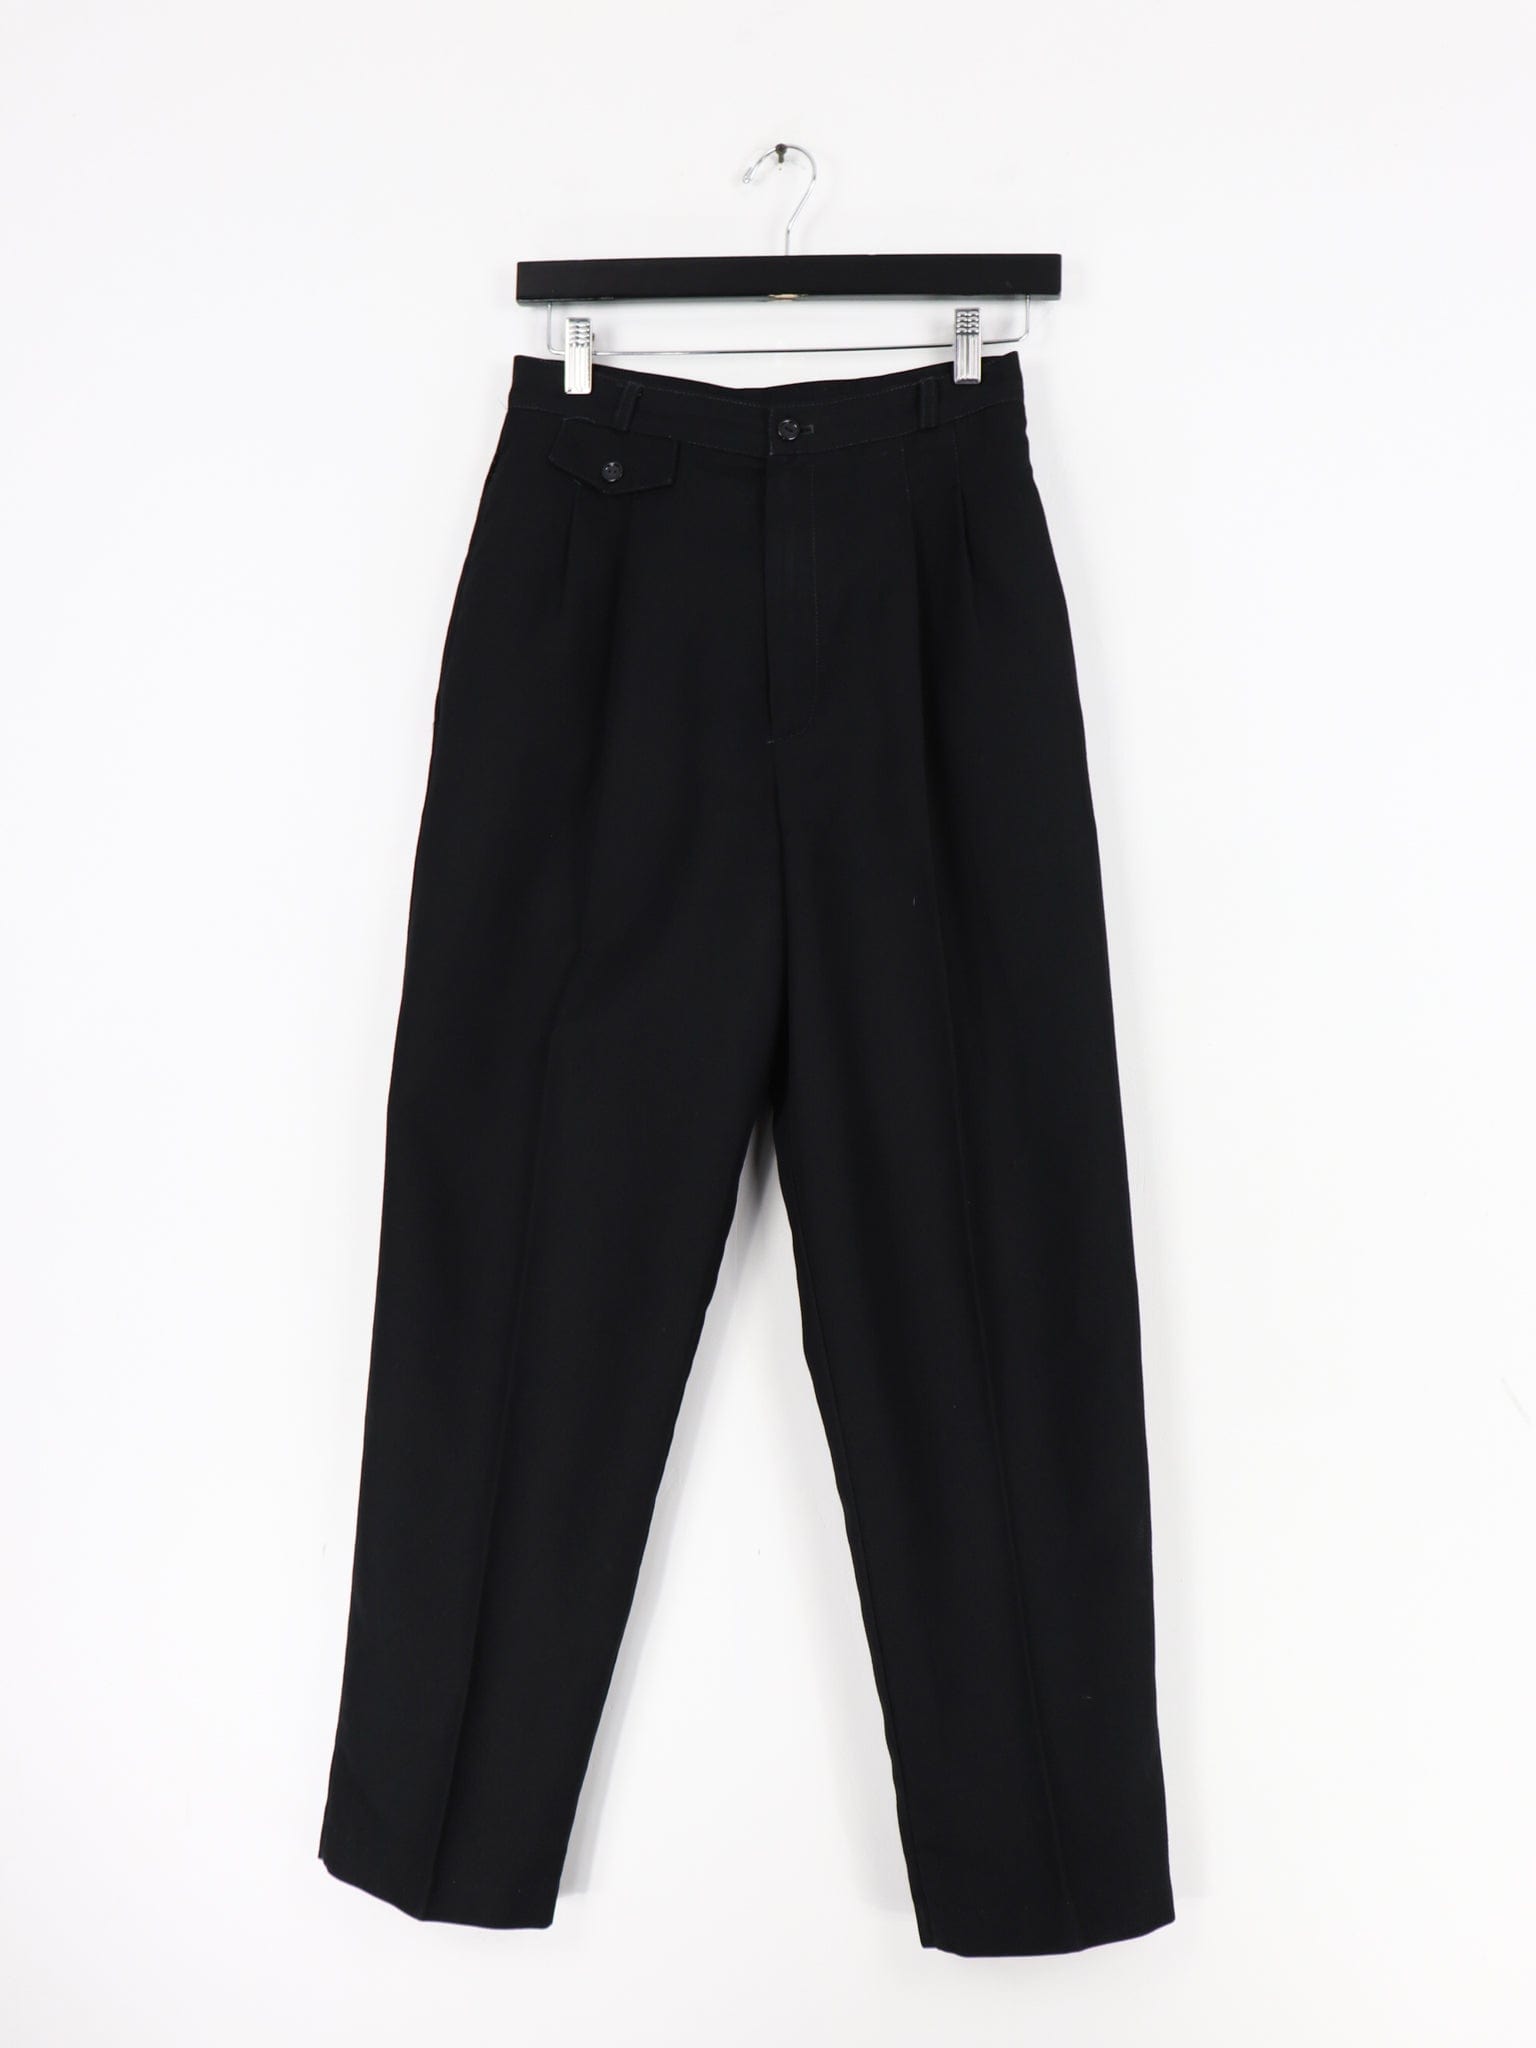 Black Dress Pants Women, Shop 10 items